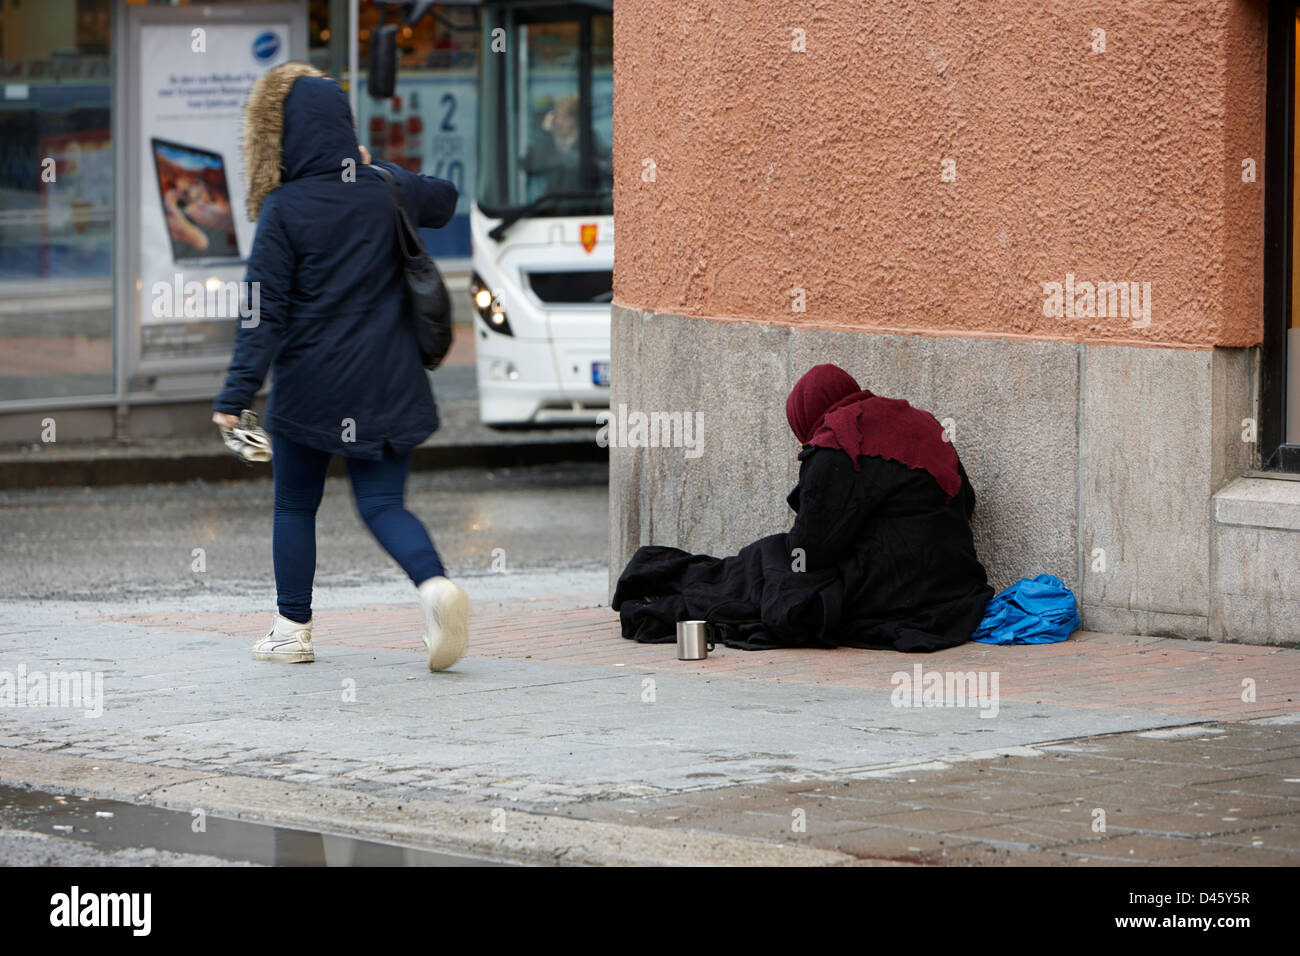 begger on cold winter street Tromso troms Norway europe Stock Photo